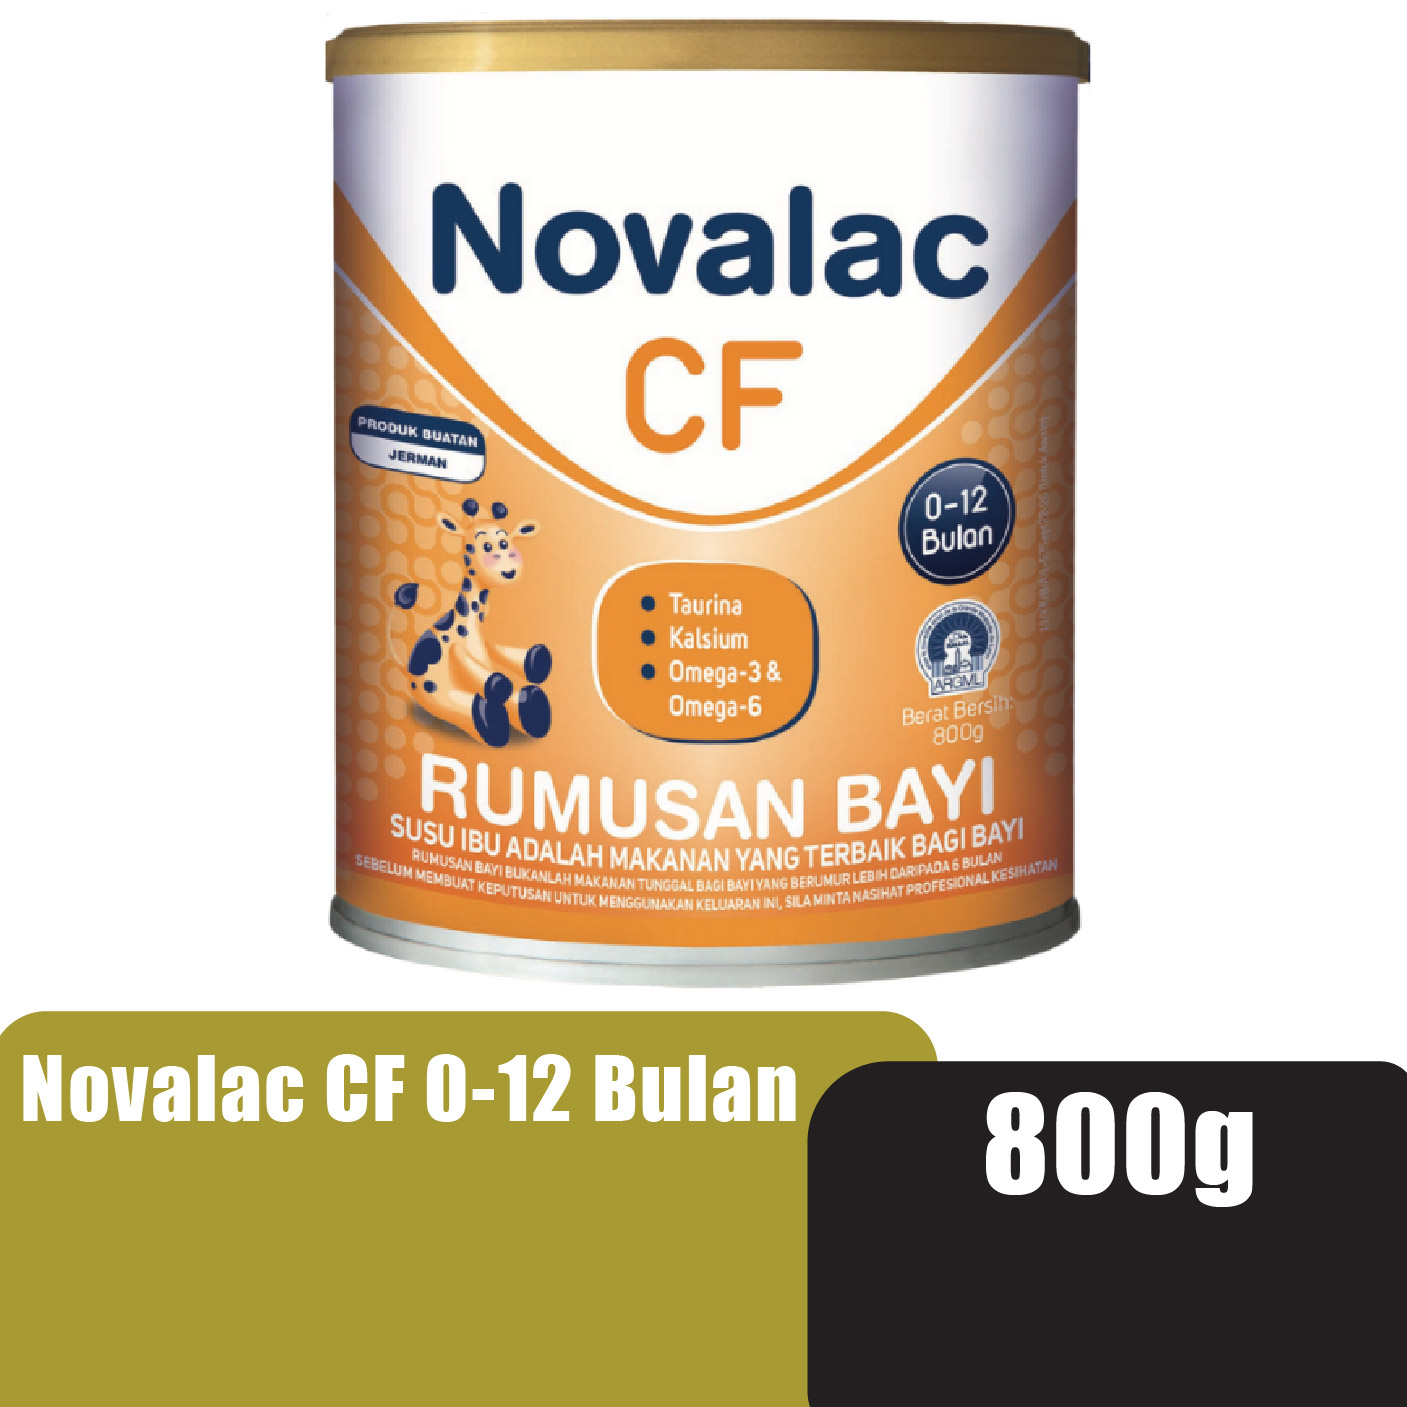 NOVALAC CF 800G 0-12 BULAN (NEW)